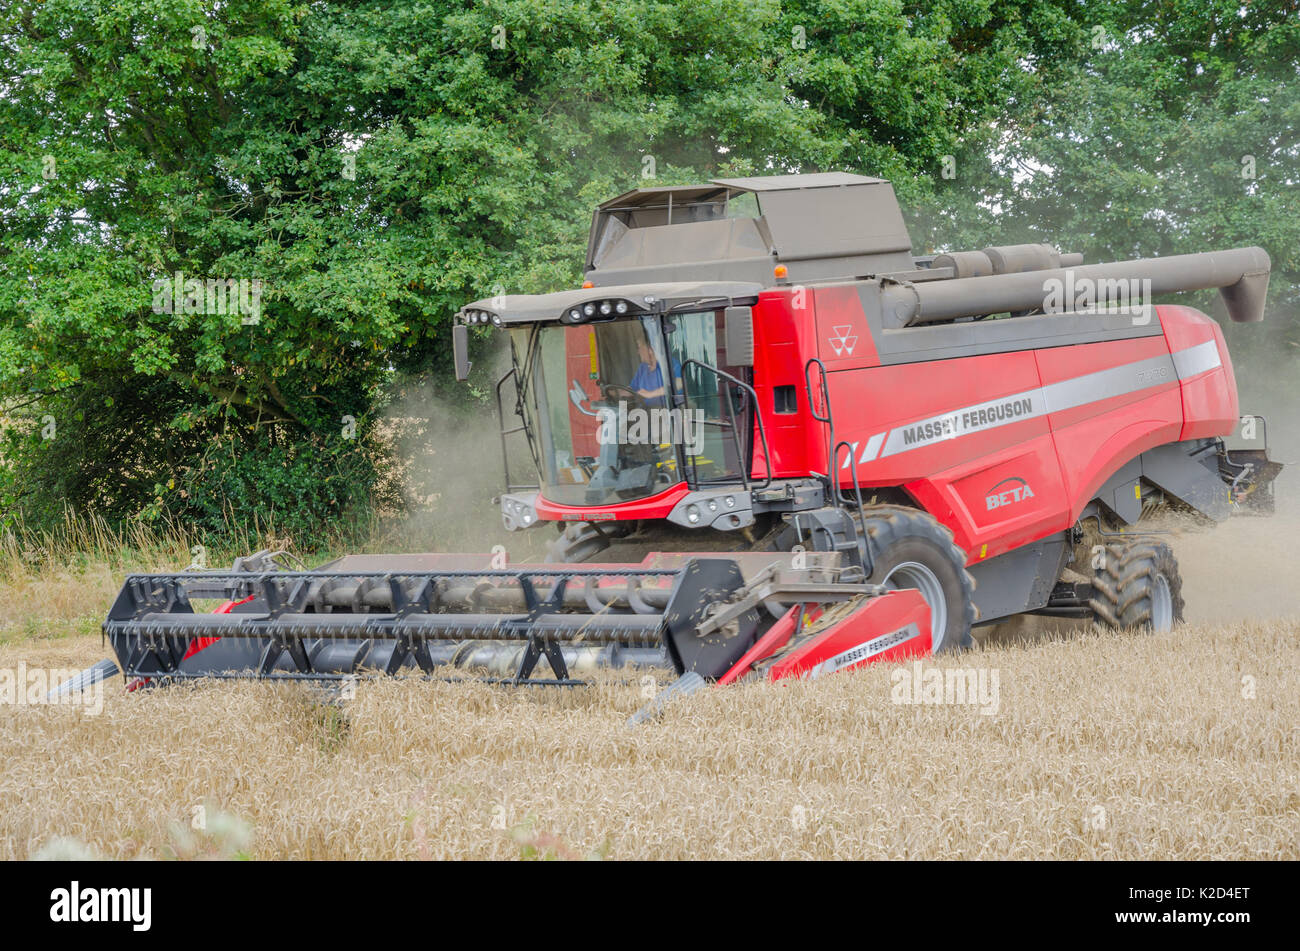 A Massey Ferguson combine harvester harvesting wheat growing in a field. Stock Photo